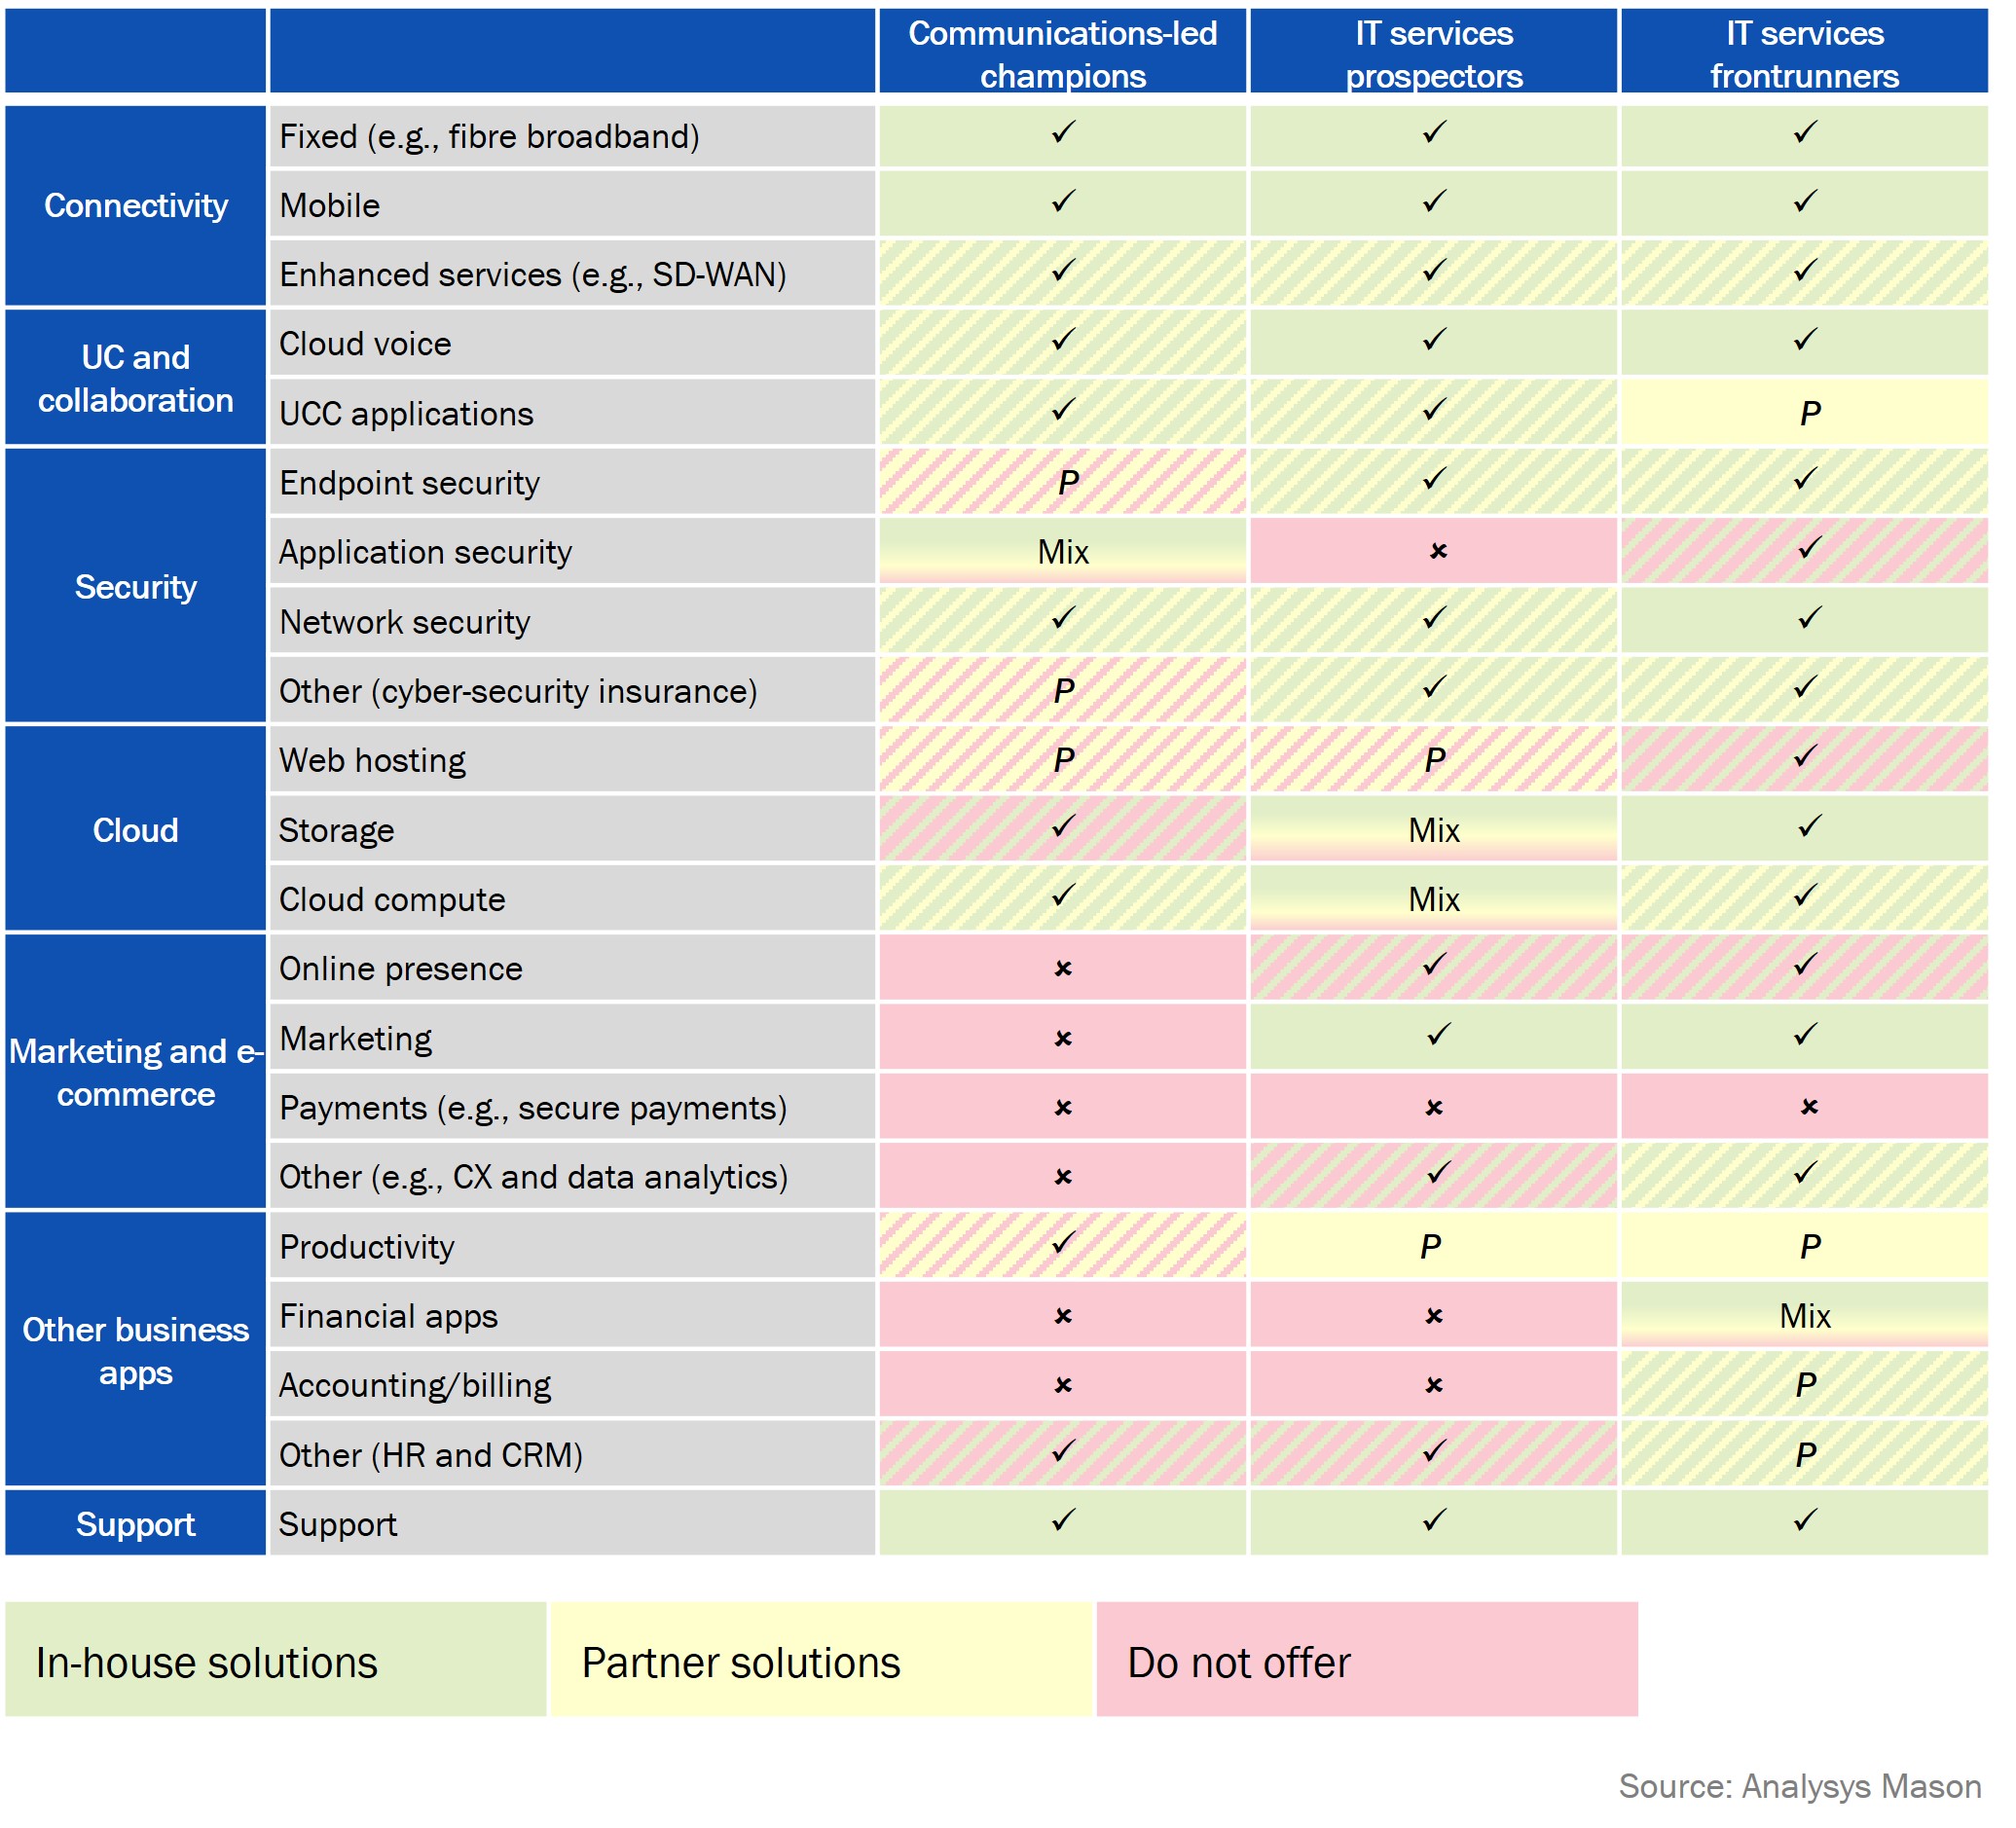 Figure 1: Comparison of operators’ SME IT services portfolios